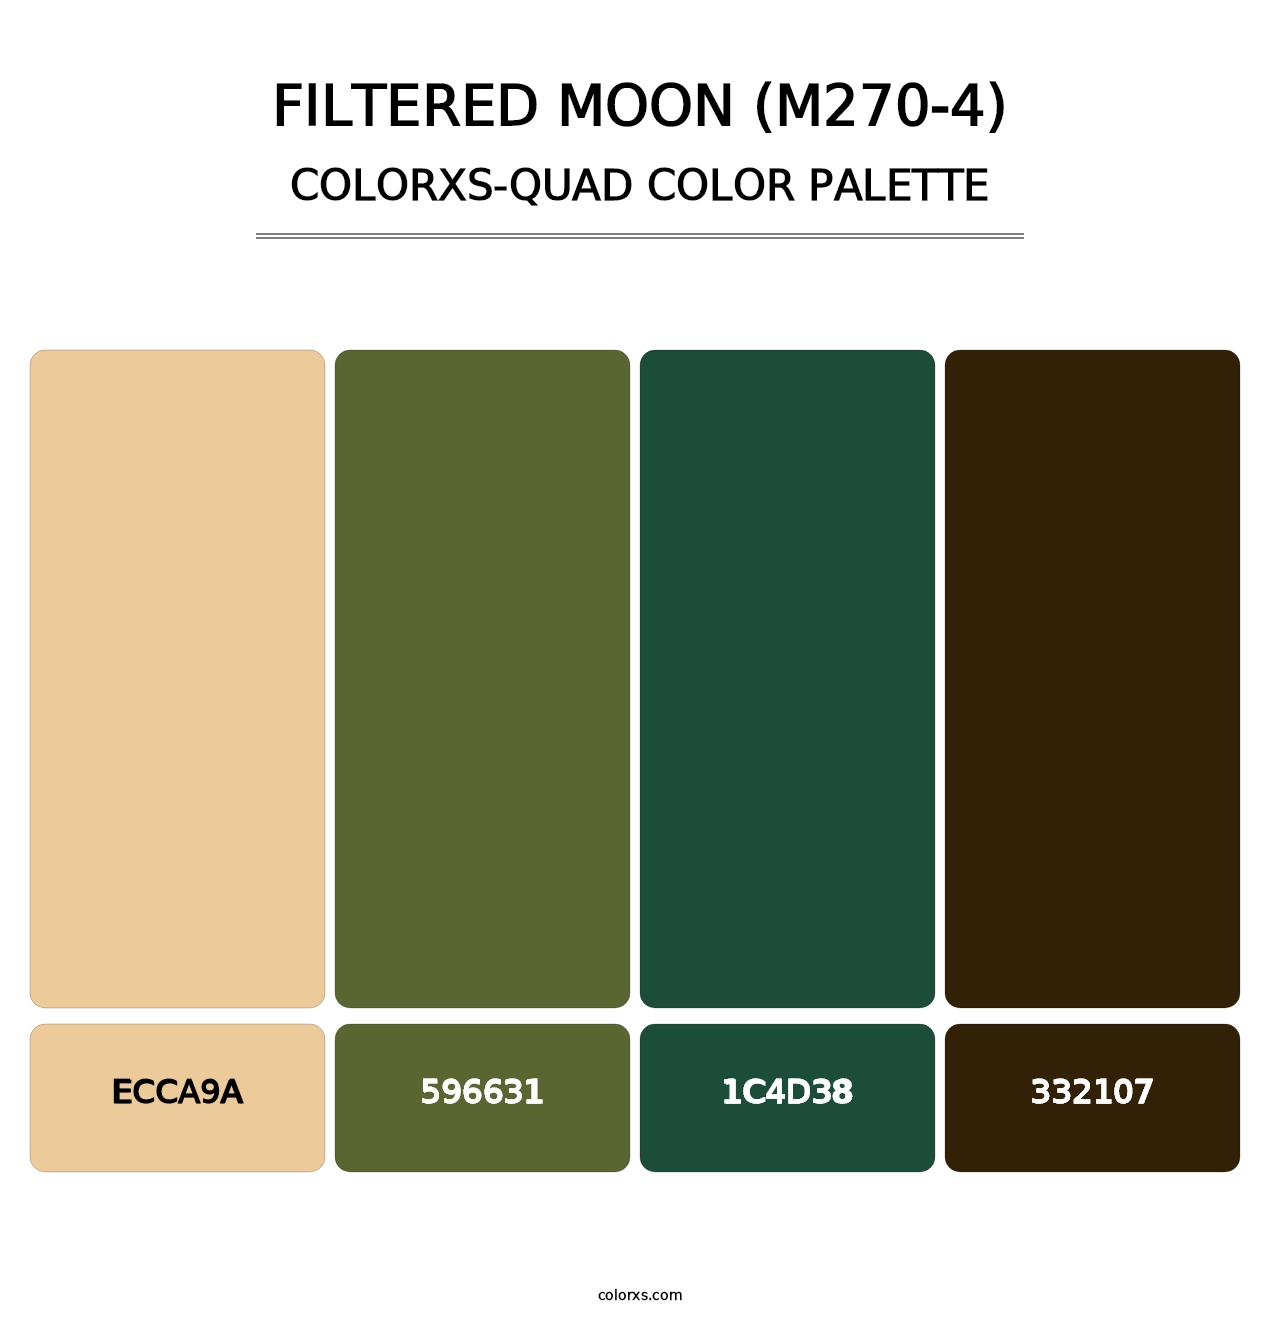 Filtered Moon (M270-4) - Colorxs Quad Palette